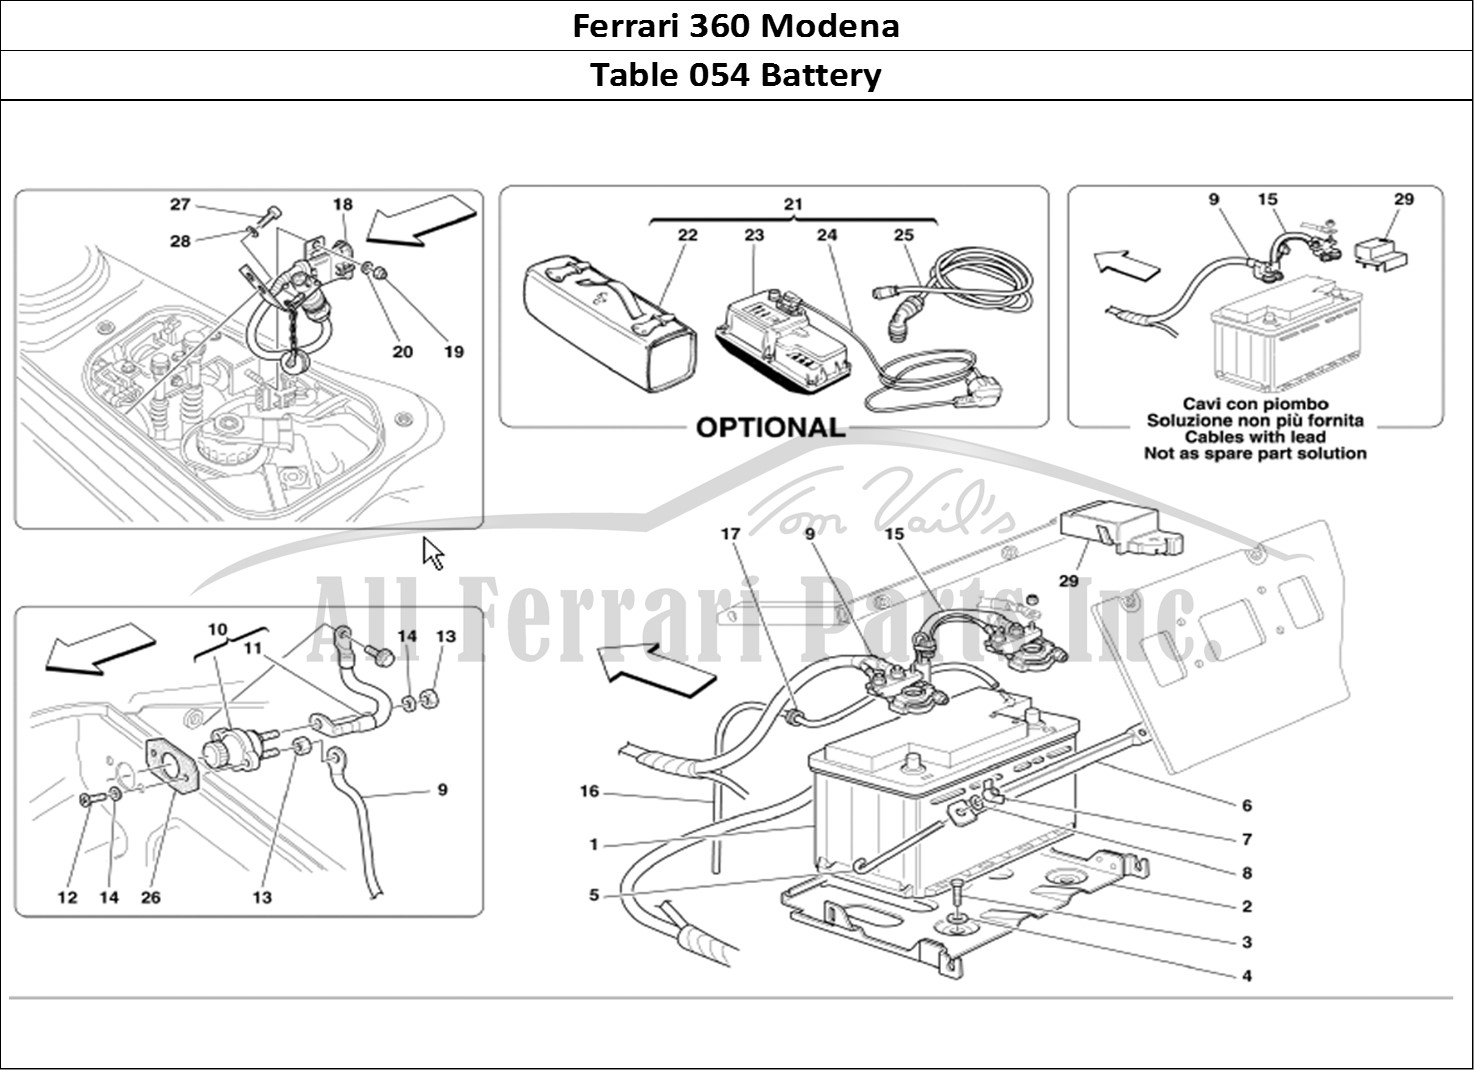 Ferrari Parts Ferrari 360 Modena Page 054 Battery